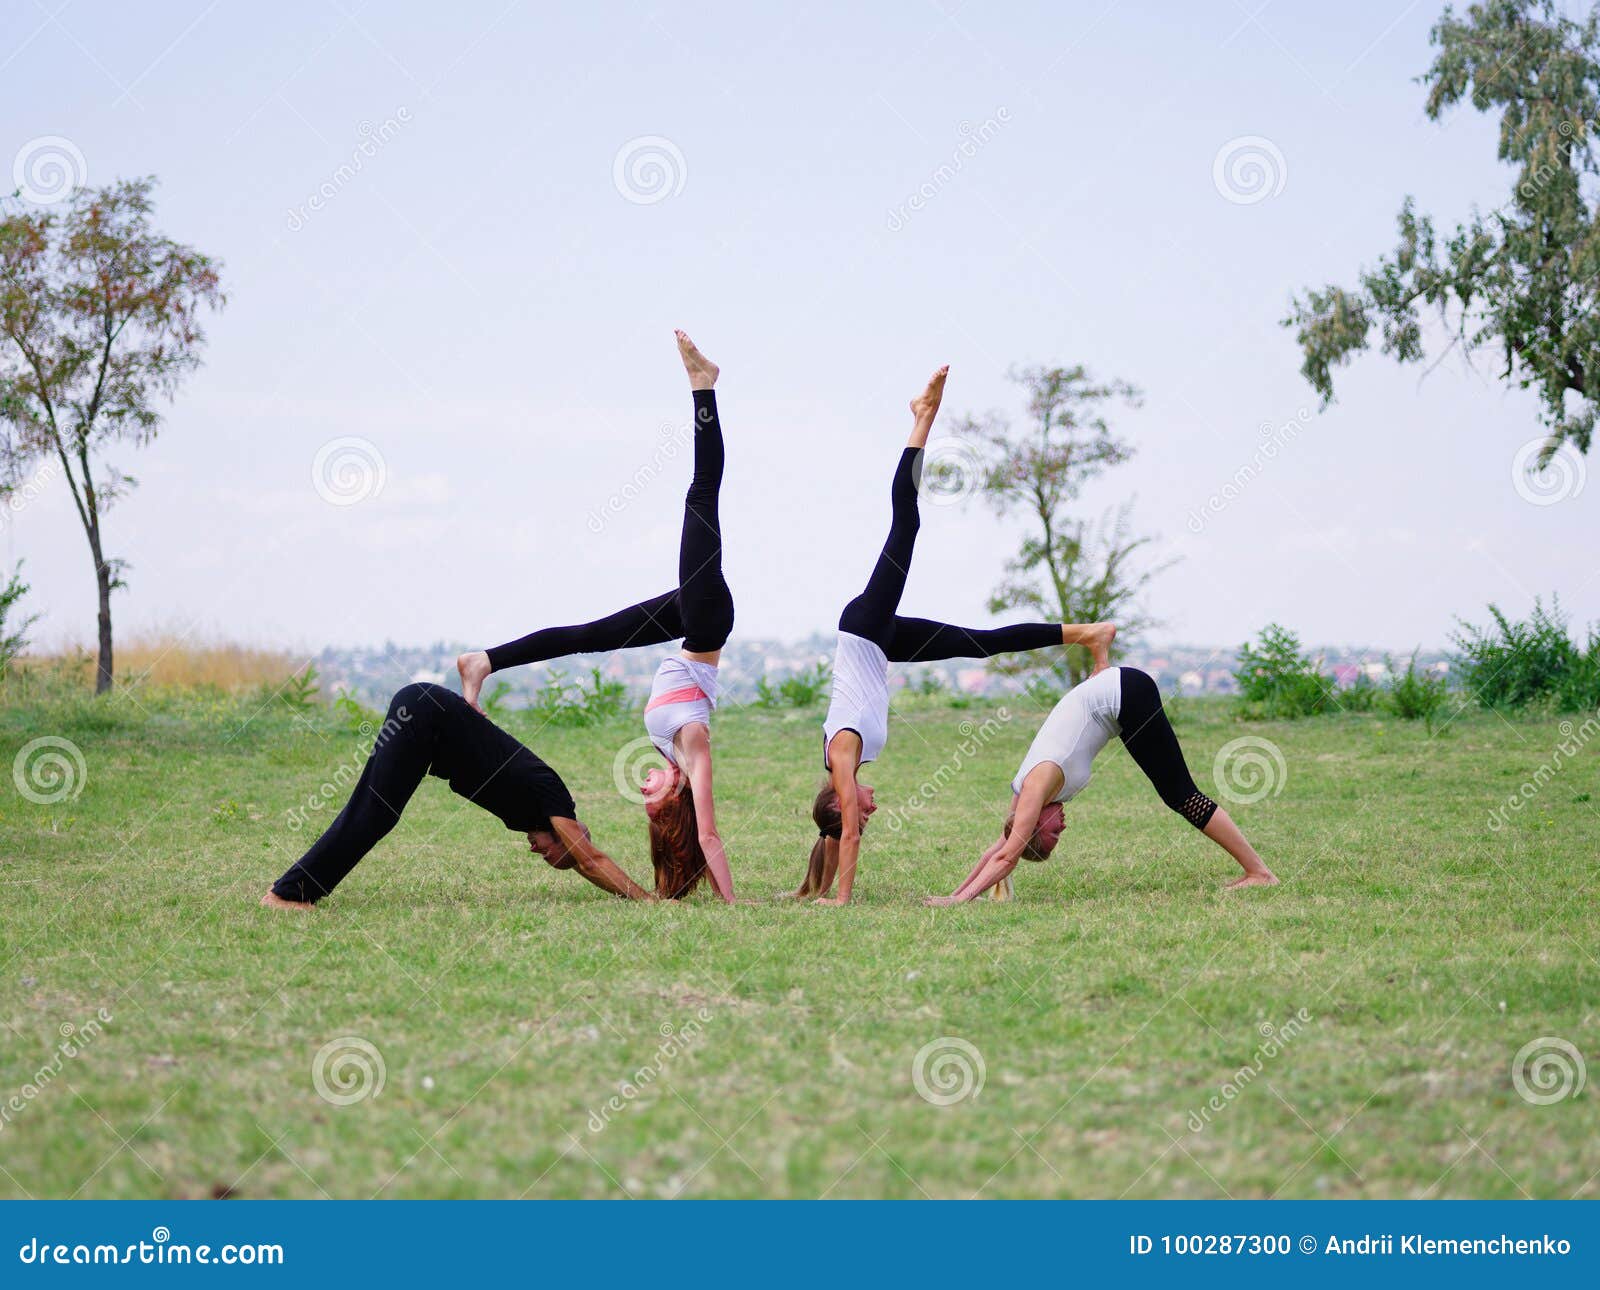 Four person acro pose - Cyndi's Pole Fitness Studio LLC | Facebook